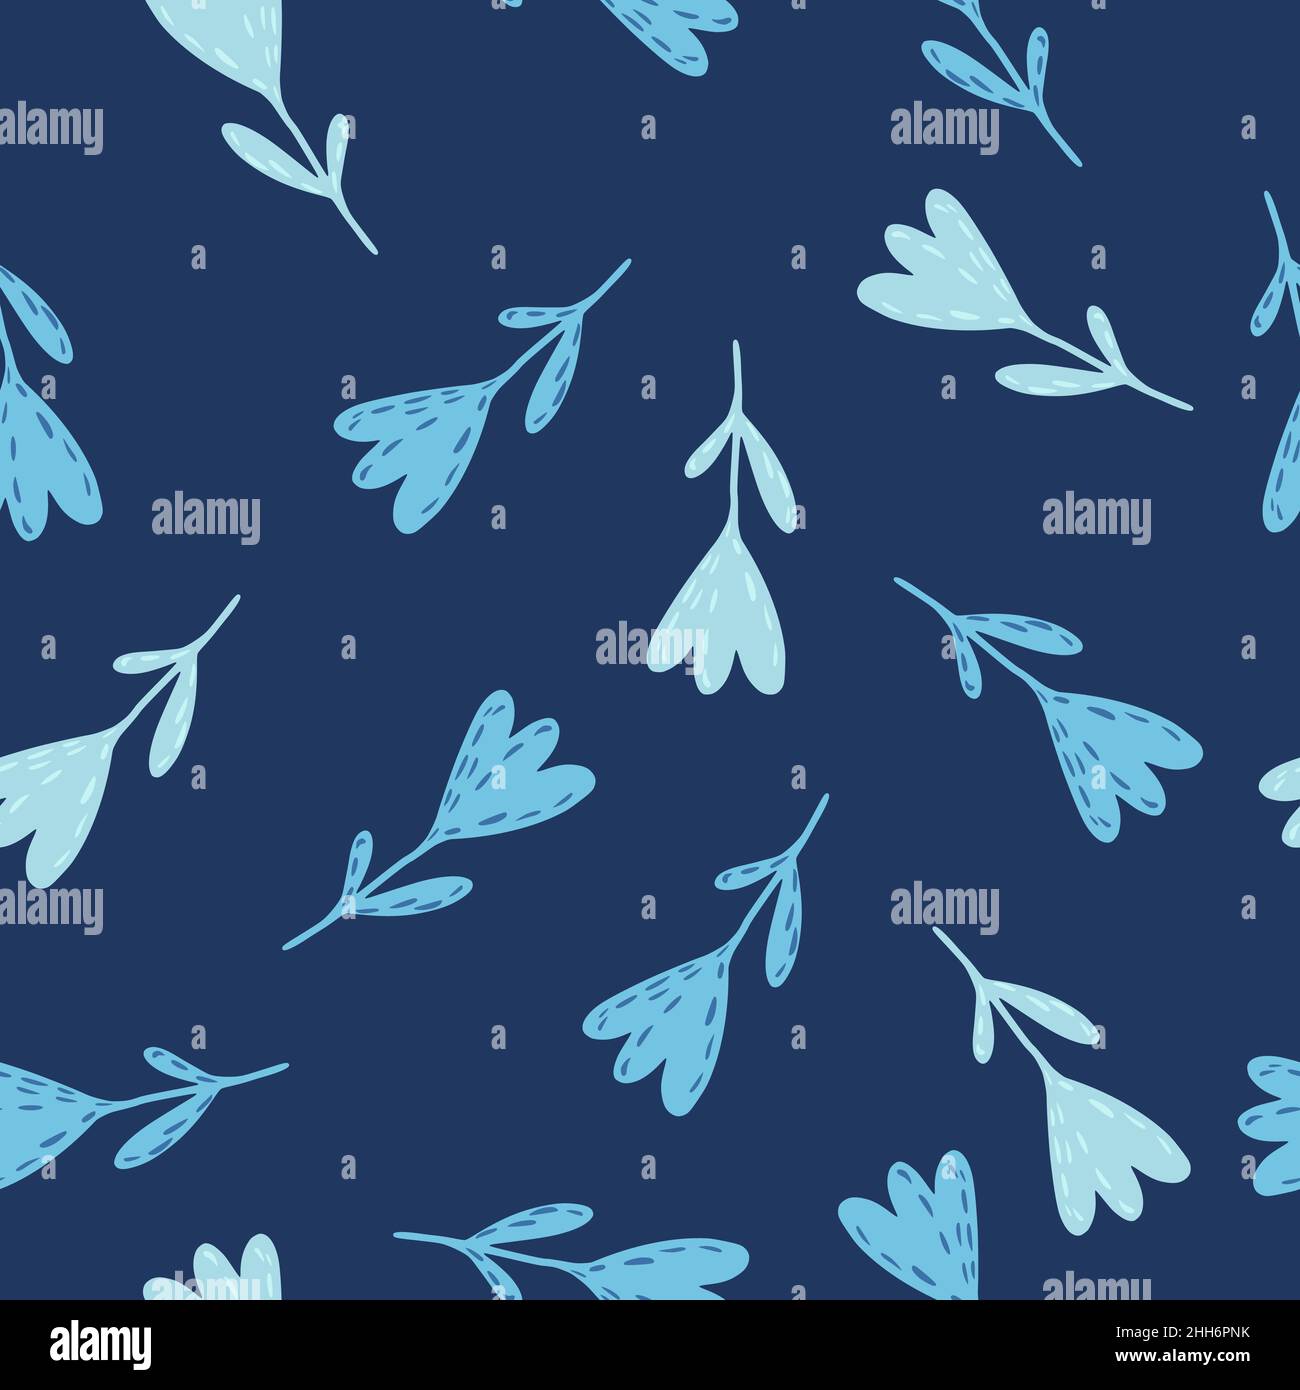 Random light blue tulips seamless pattern. Hand drawn stylized botanic print on navy colored background. Vector illustration for seasonal textile prin Stock Vector